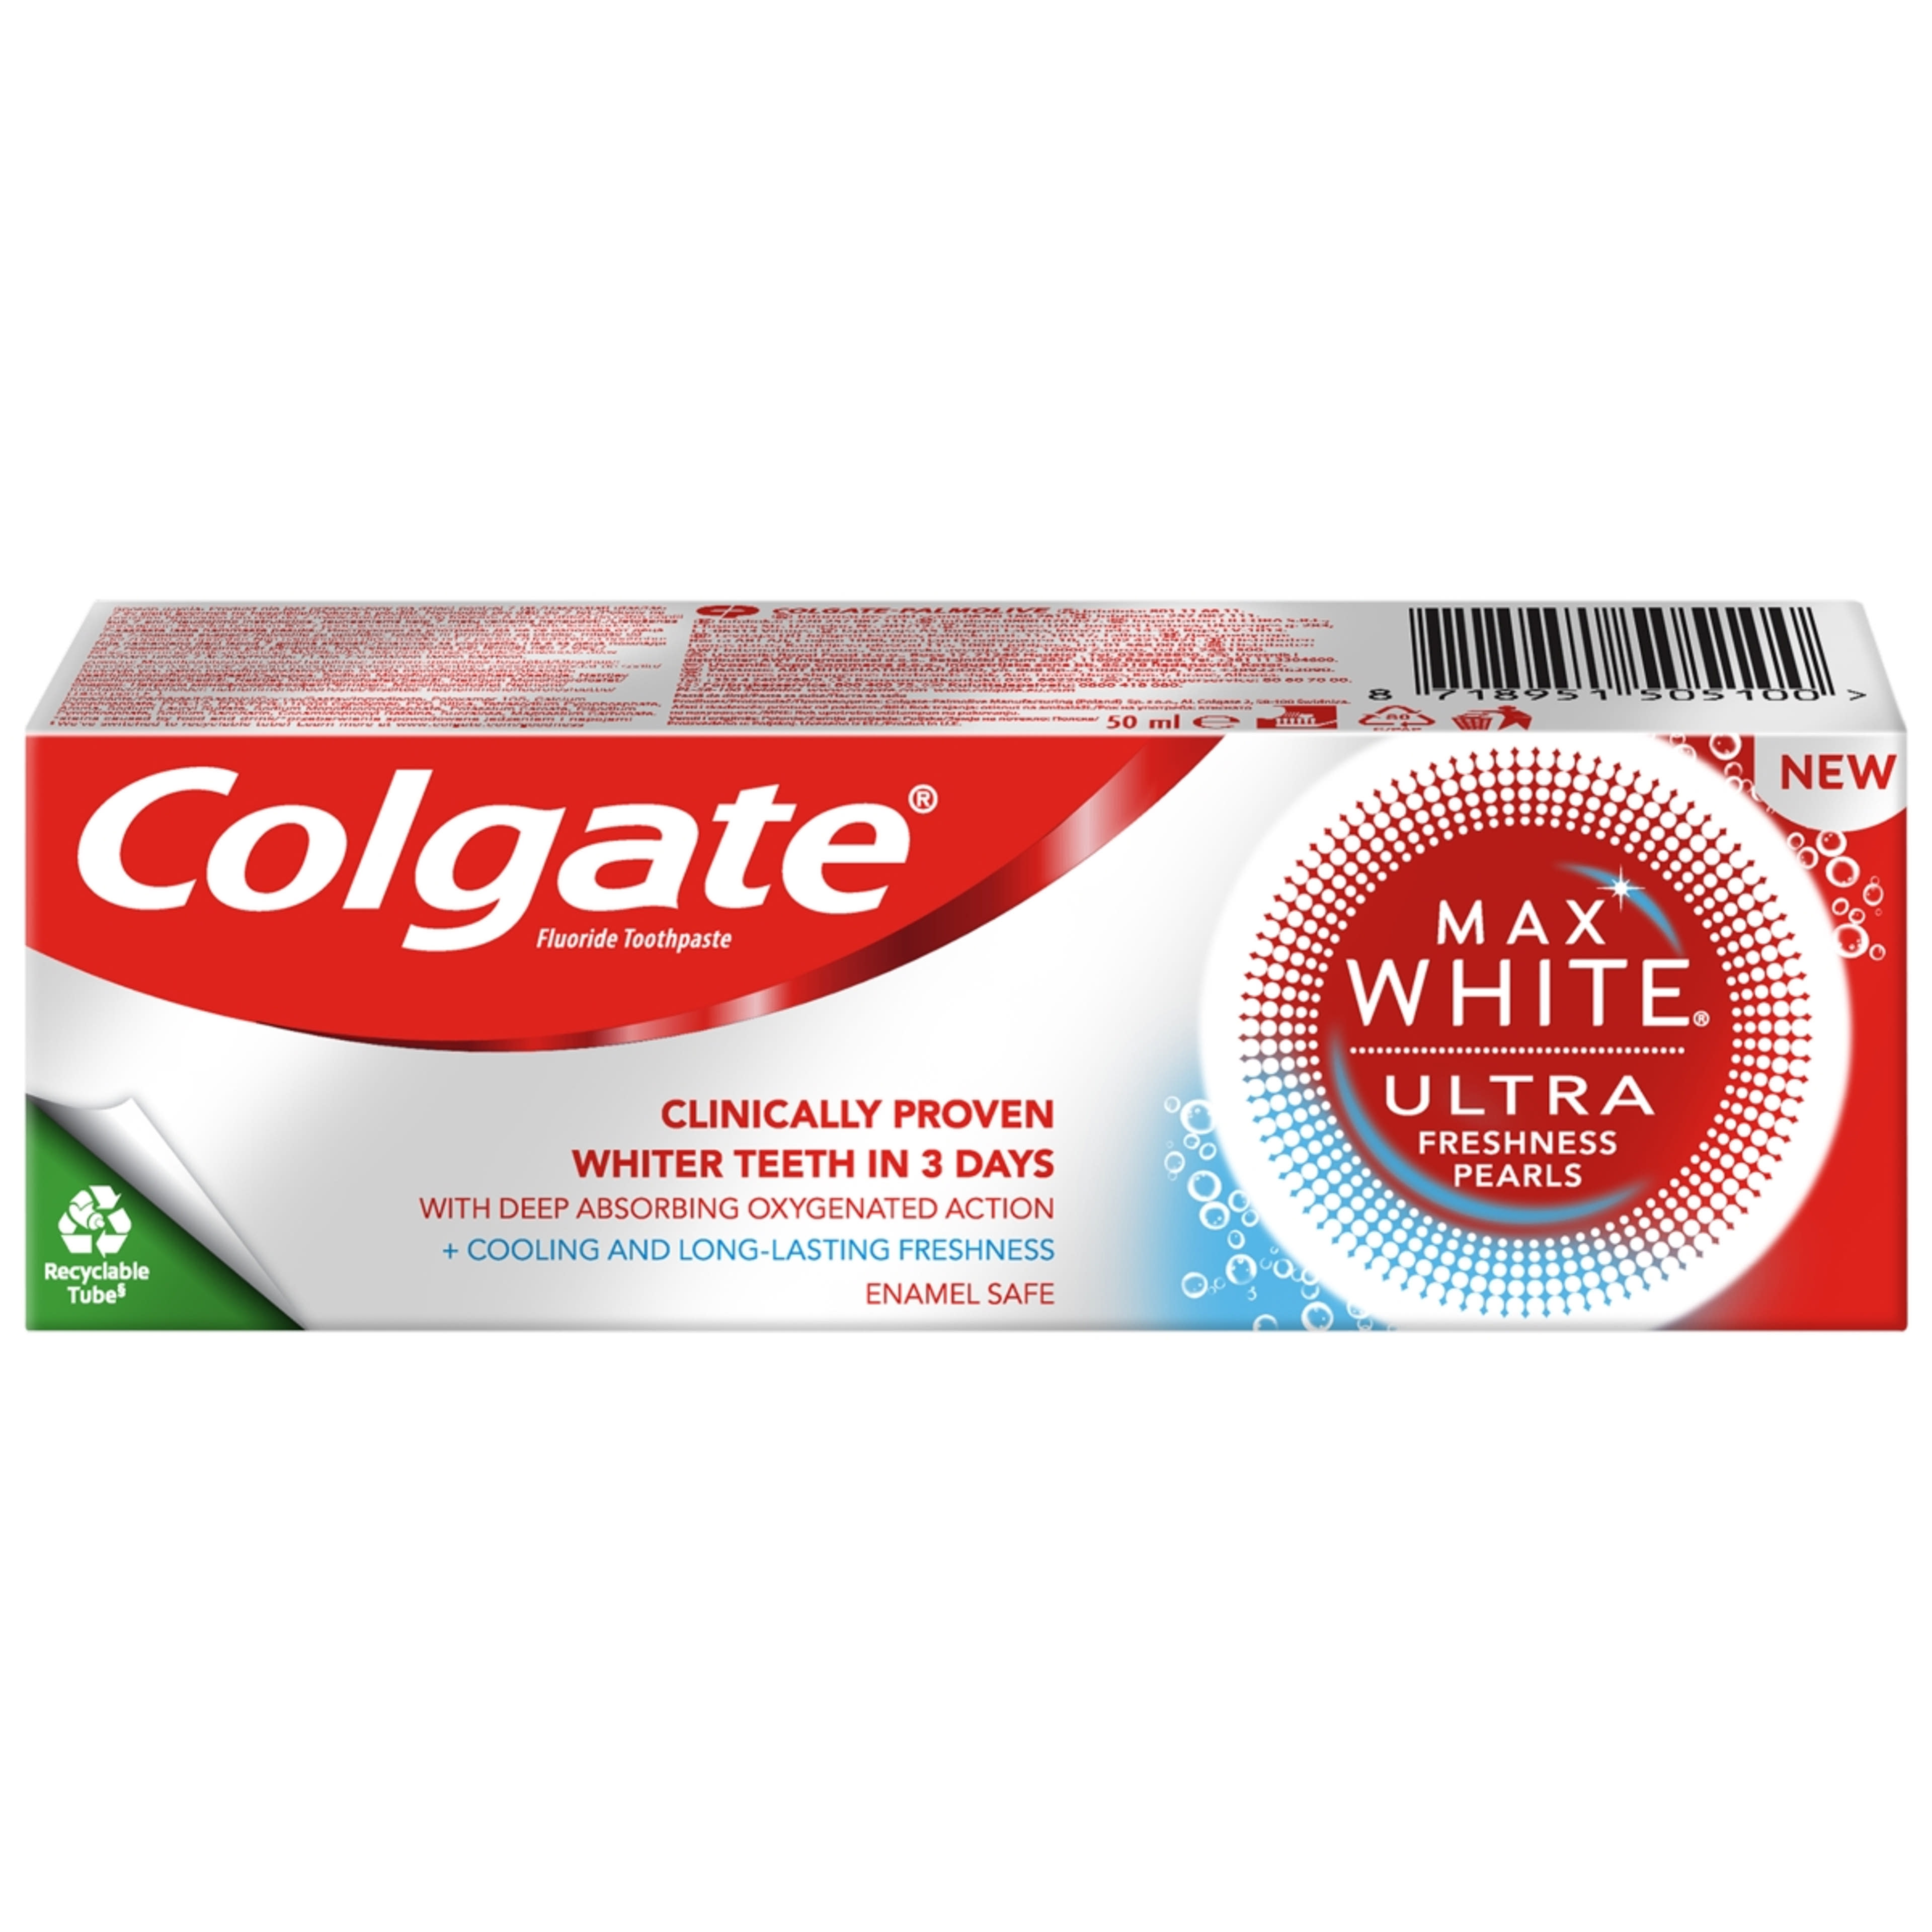 Colgate Max White Ultra Freshness Pearls fehérítő fogkrém - 50 ml-1